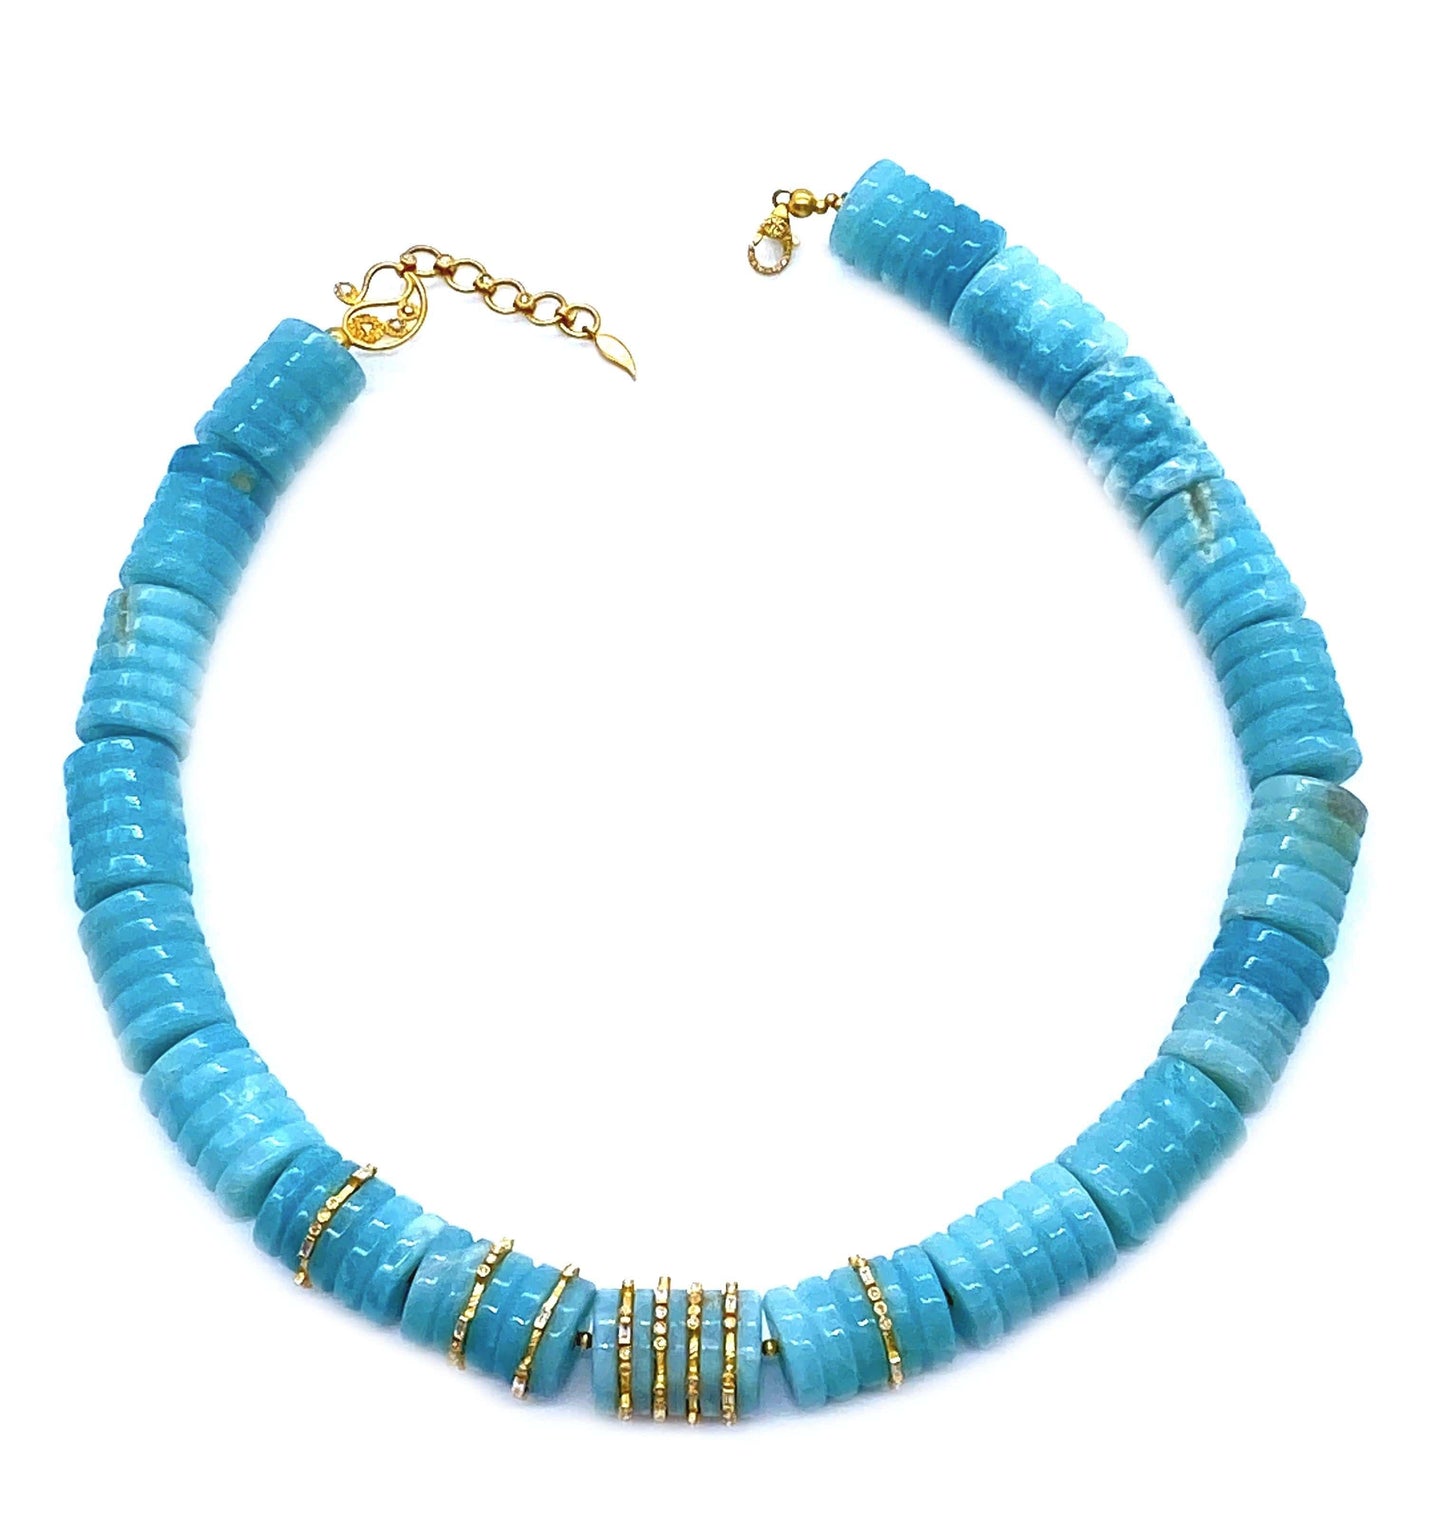 Affinity 20K Aquamarine Necklace - Coomi